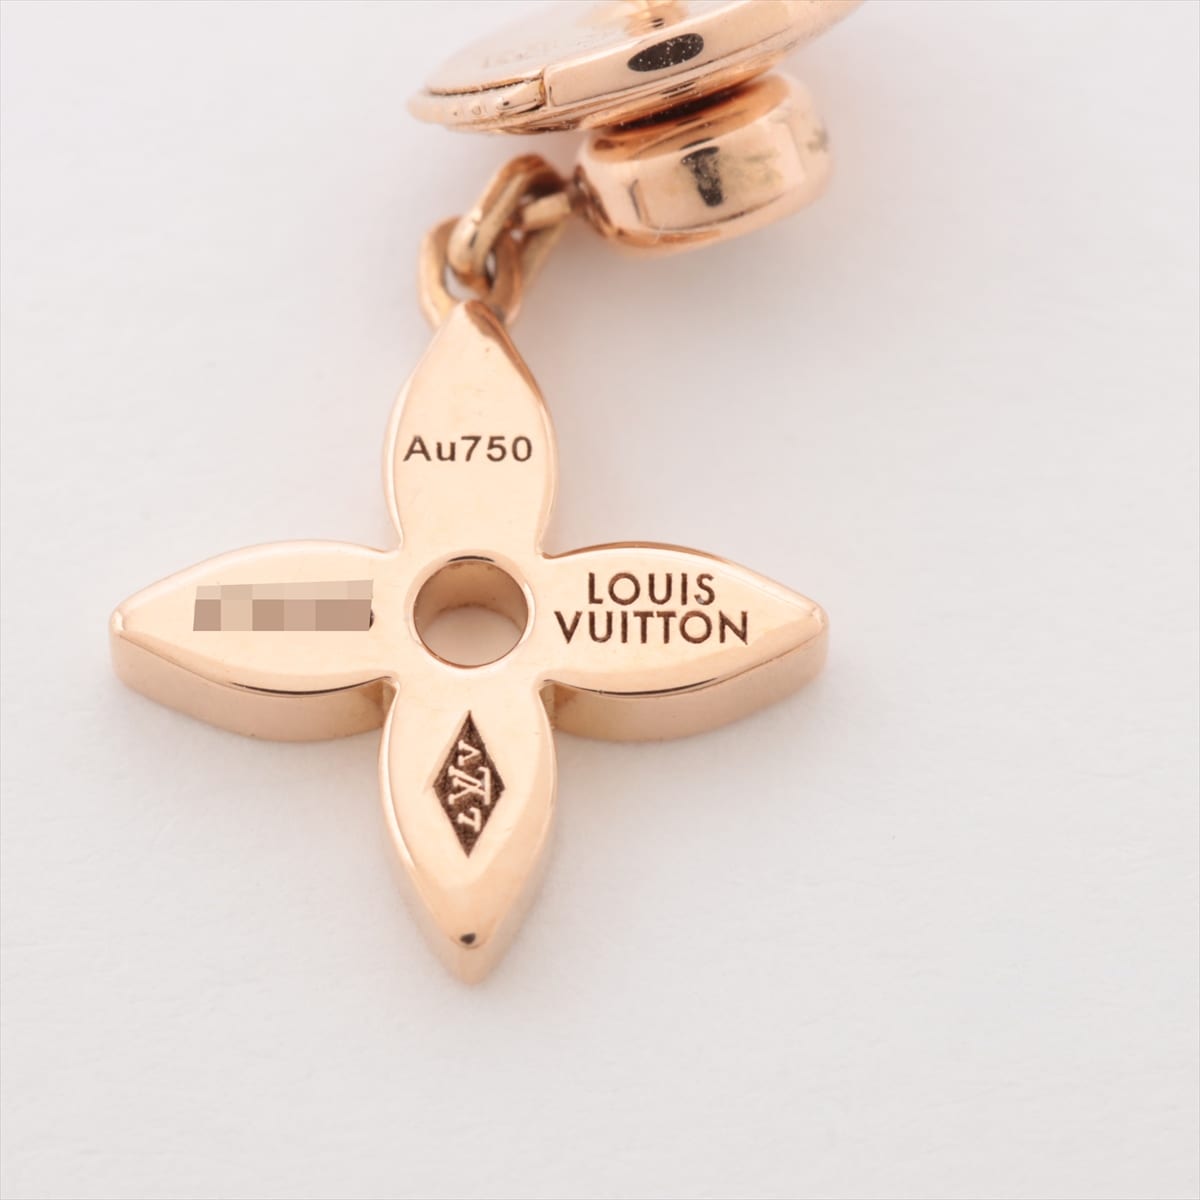 Louis Vuitton Puz Monogram Idylle diamond Piercing jewelry 750(PG) 2.2g